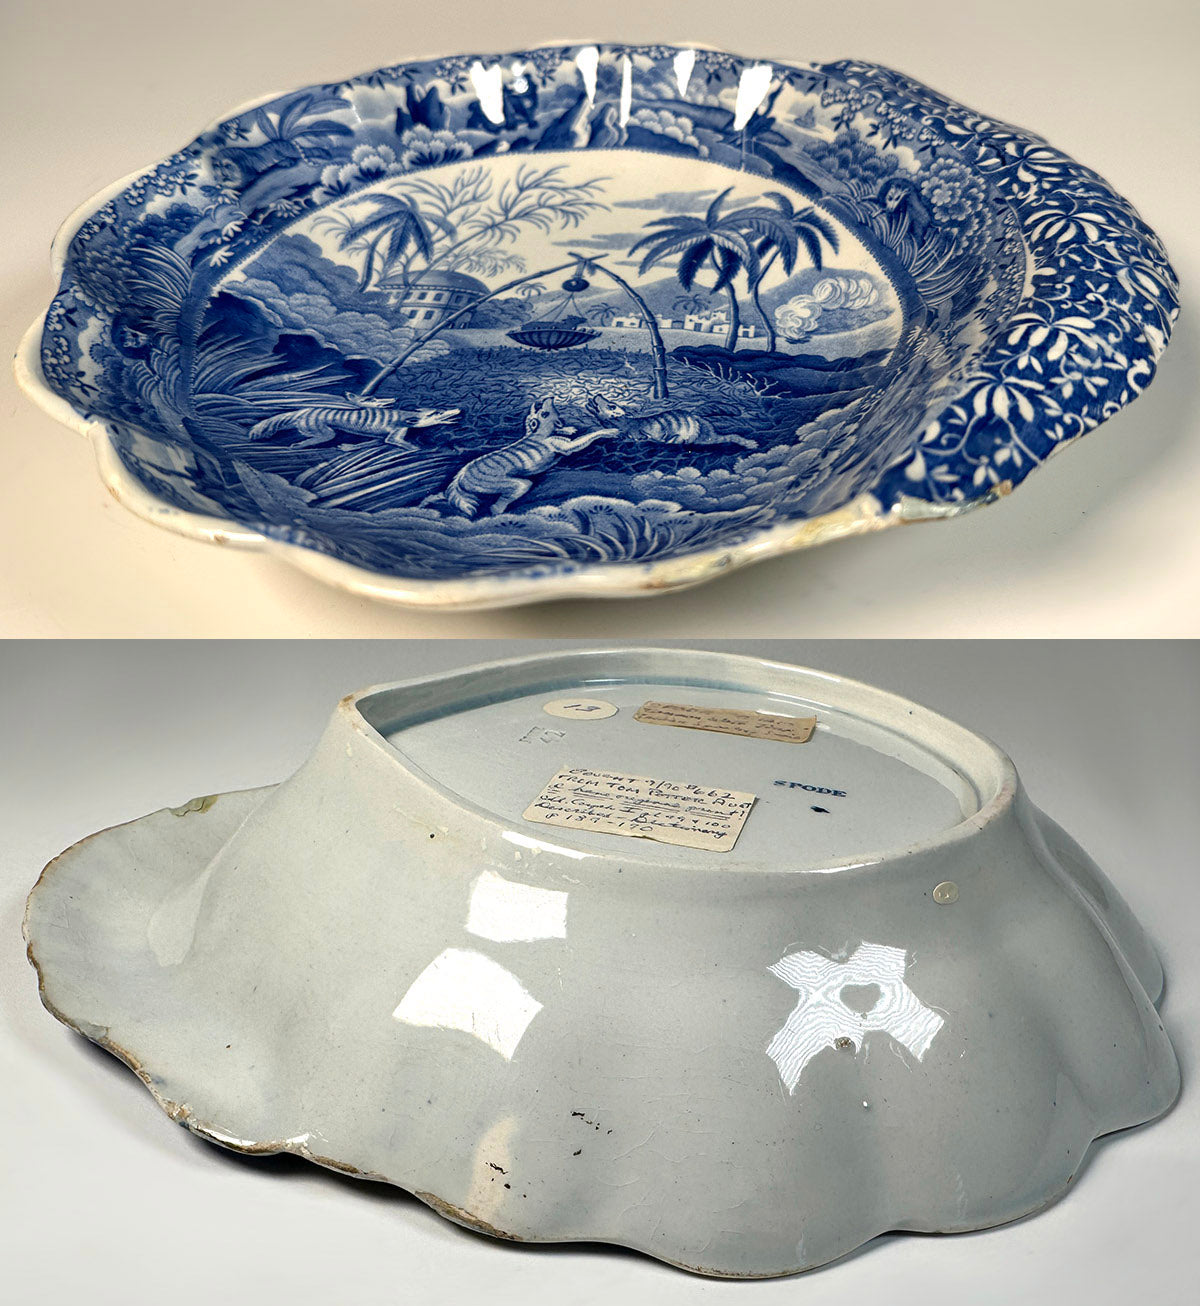 RARE c.1810-20 Spode Pickle Dish, Indian Sporting Series, Staffordshire Blue Transferware Stone China